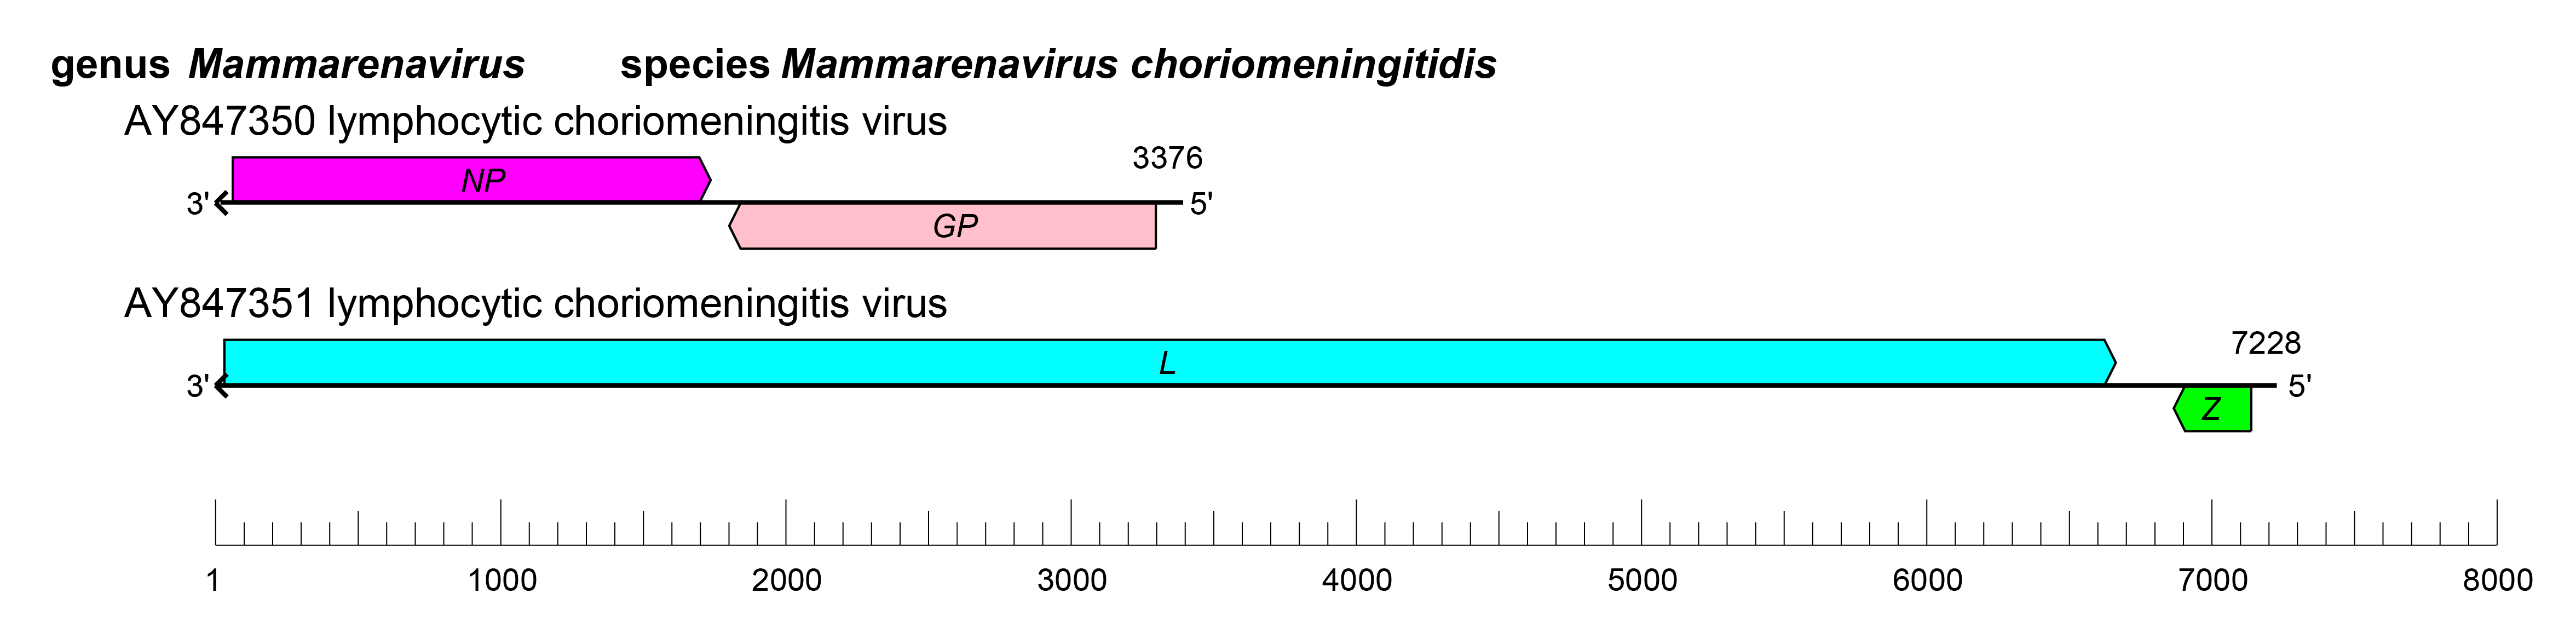 Mammarenavirus genome organisation